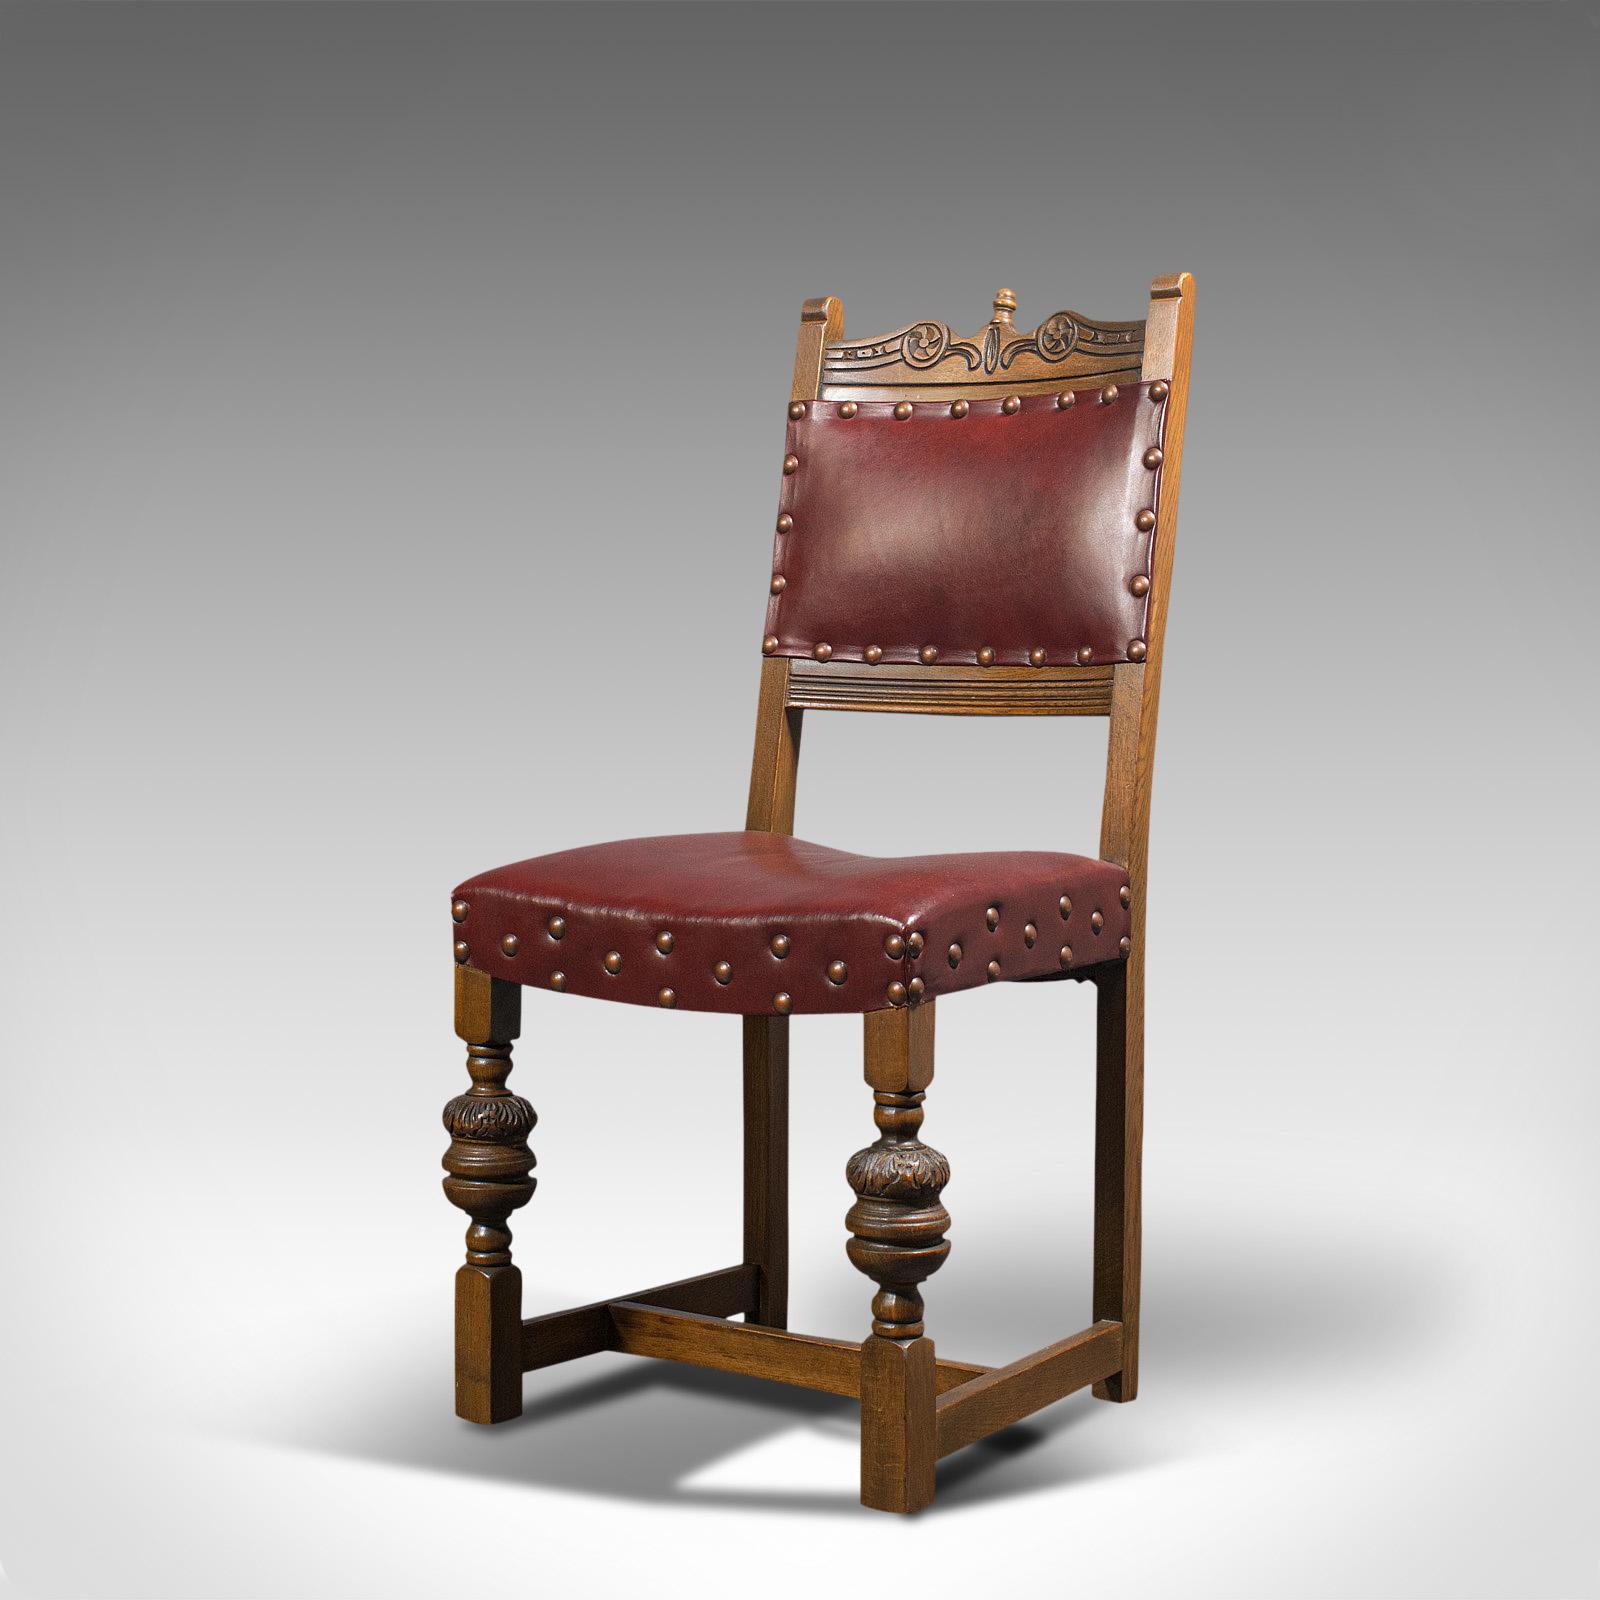 British Vintage, Set of 8 Dining Chairs, English, Oak, Leather, Carolean Revival Taste